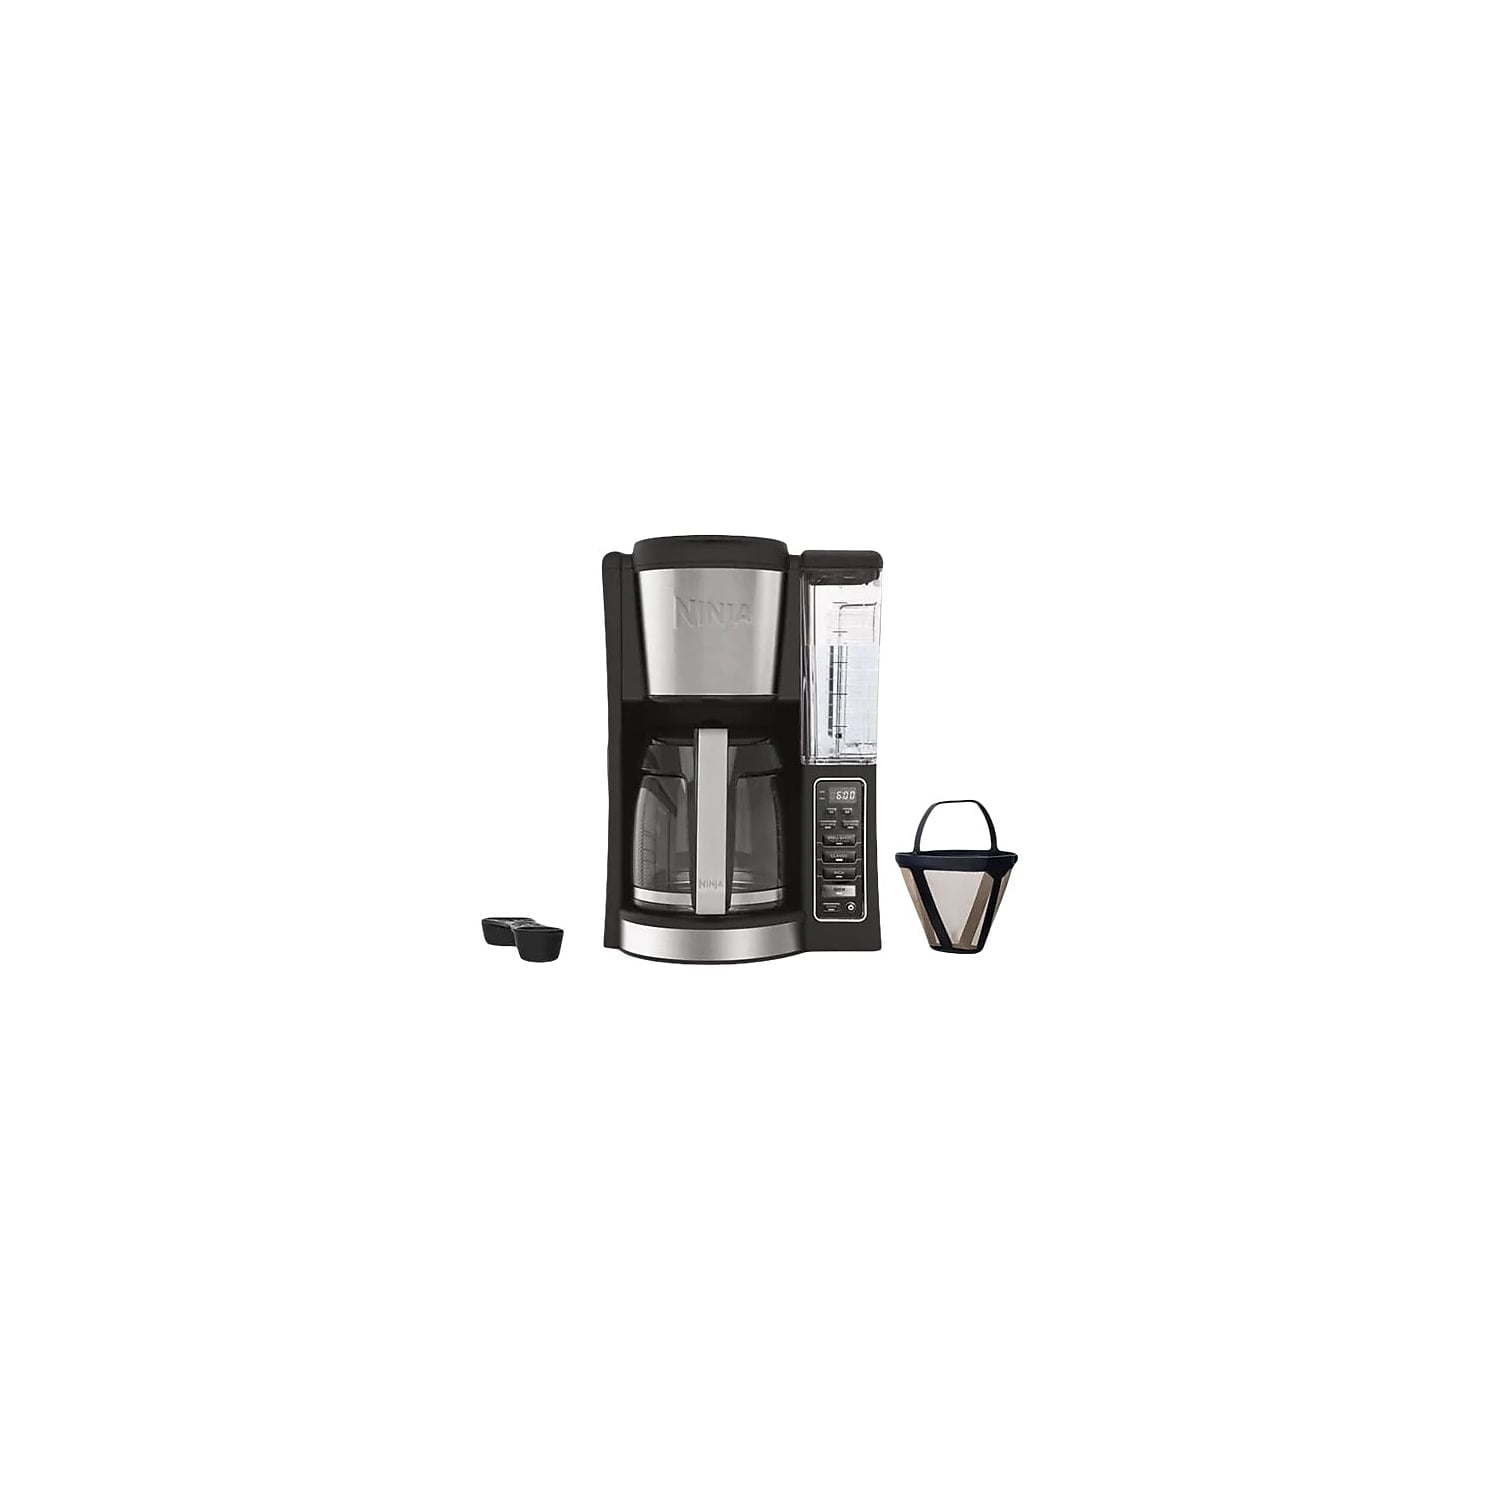 NINJA 12-Cup Stainless Steel Programmable Drip Coffee Maker (CE251